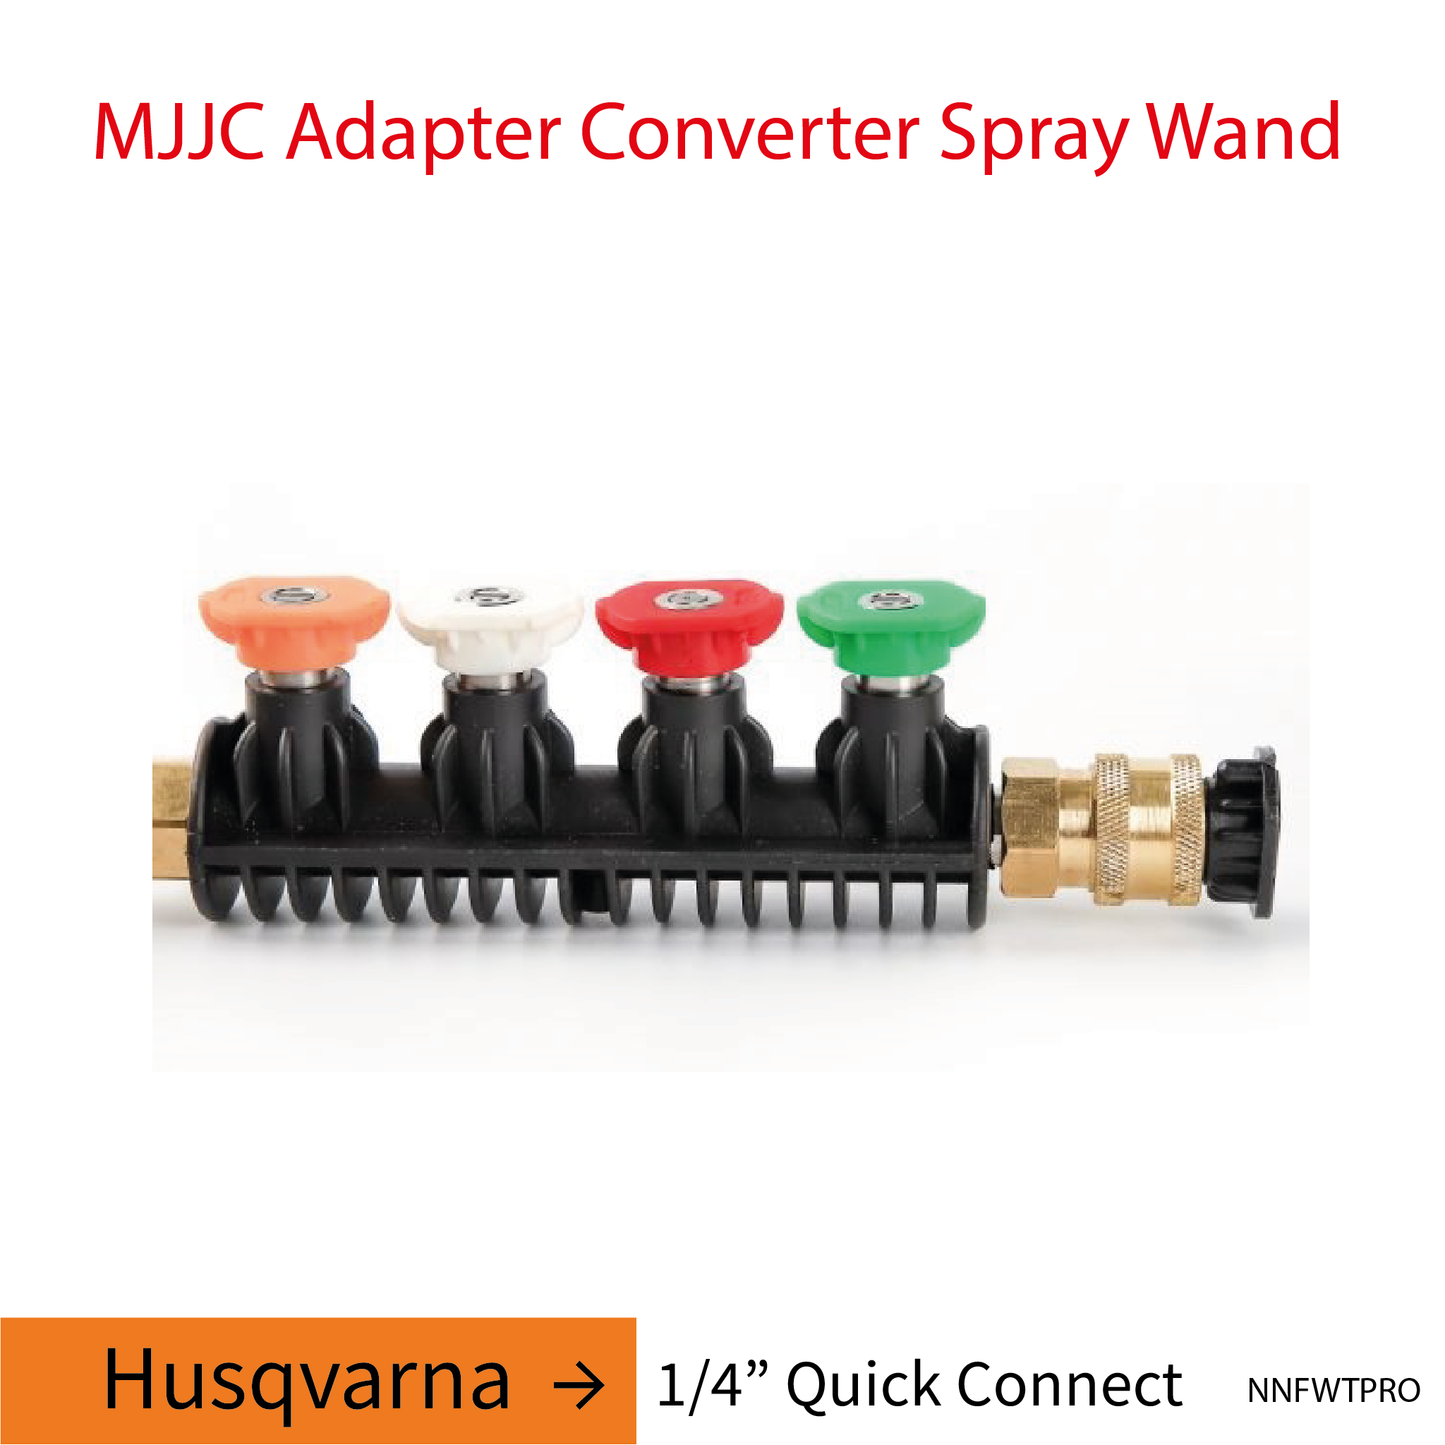 Husqvarna MJJC Adapter Conversion Converter pressure washer Spray Wand with 5 spray tips